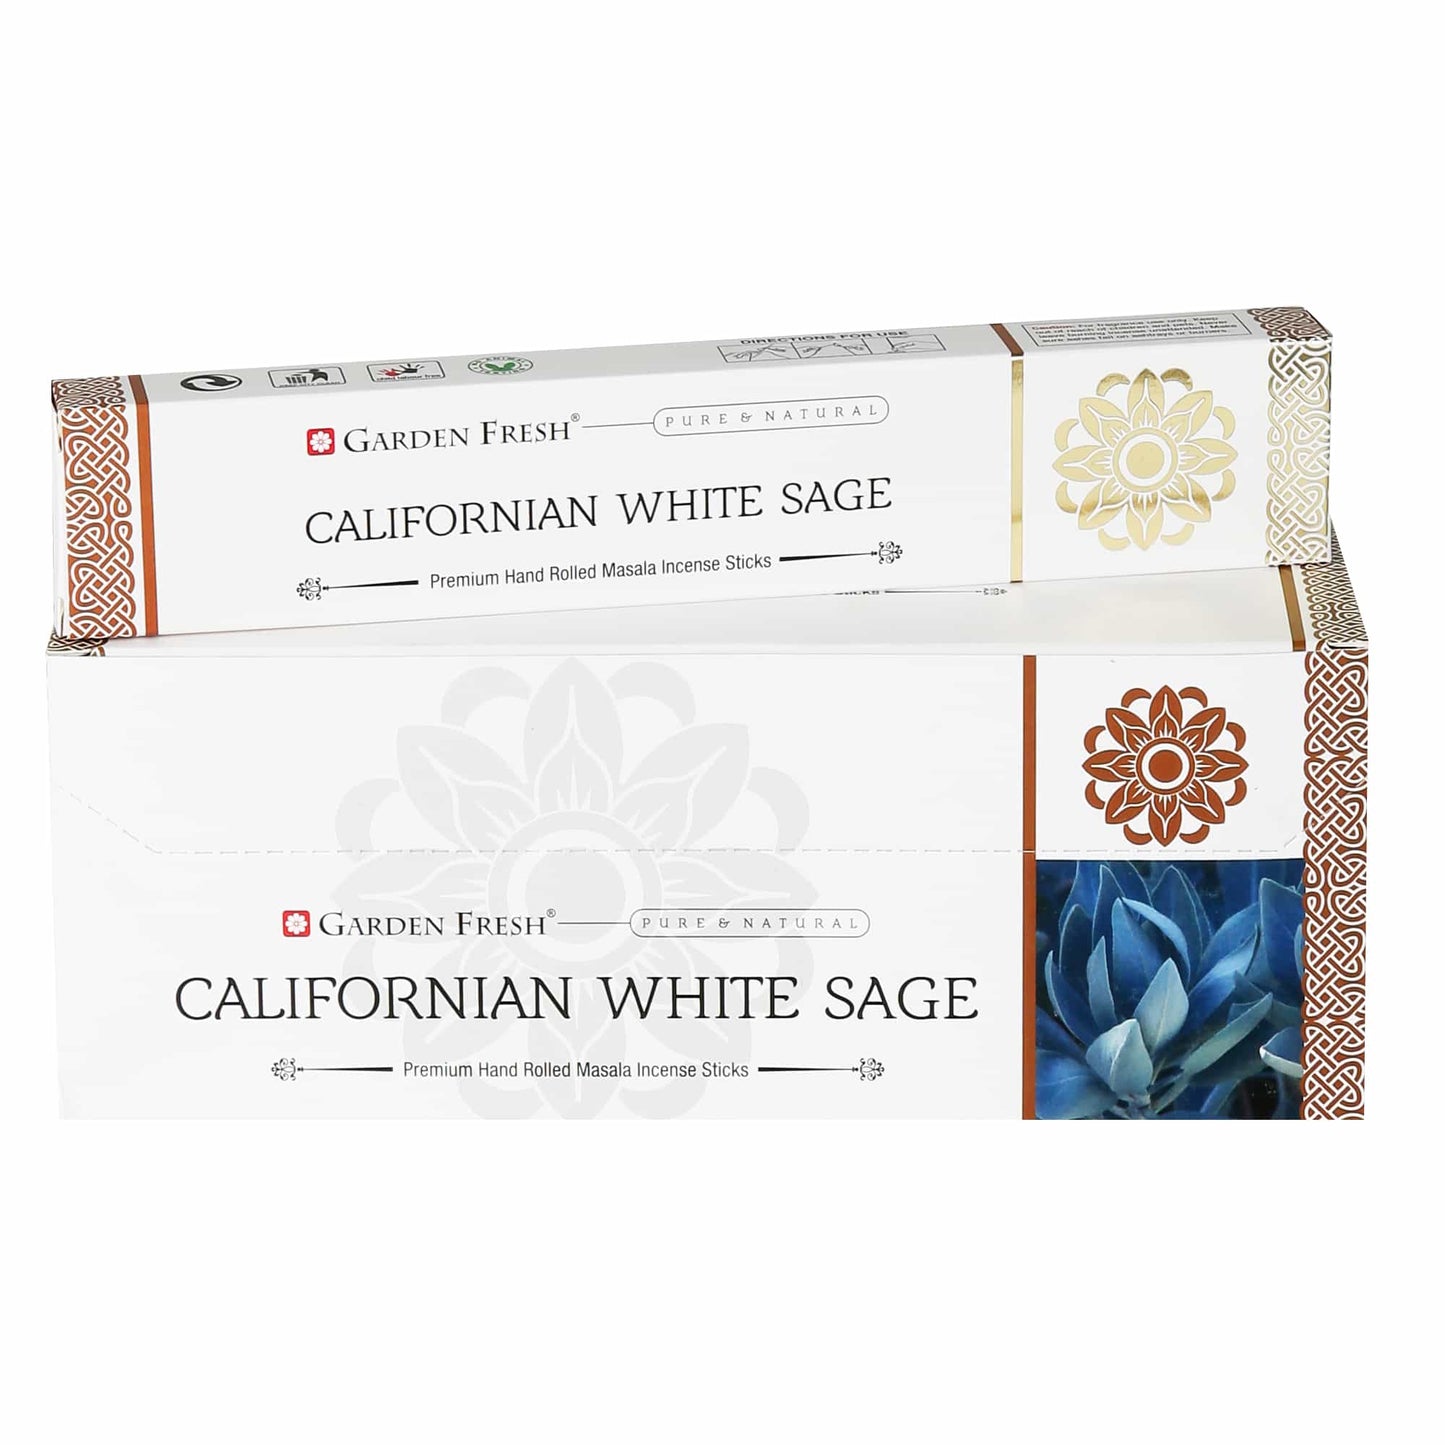 Californian White Sage masala incense sticks